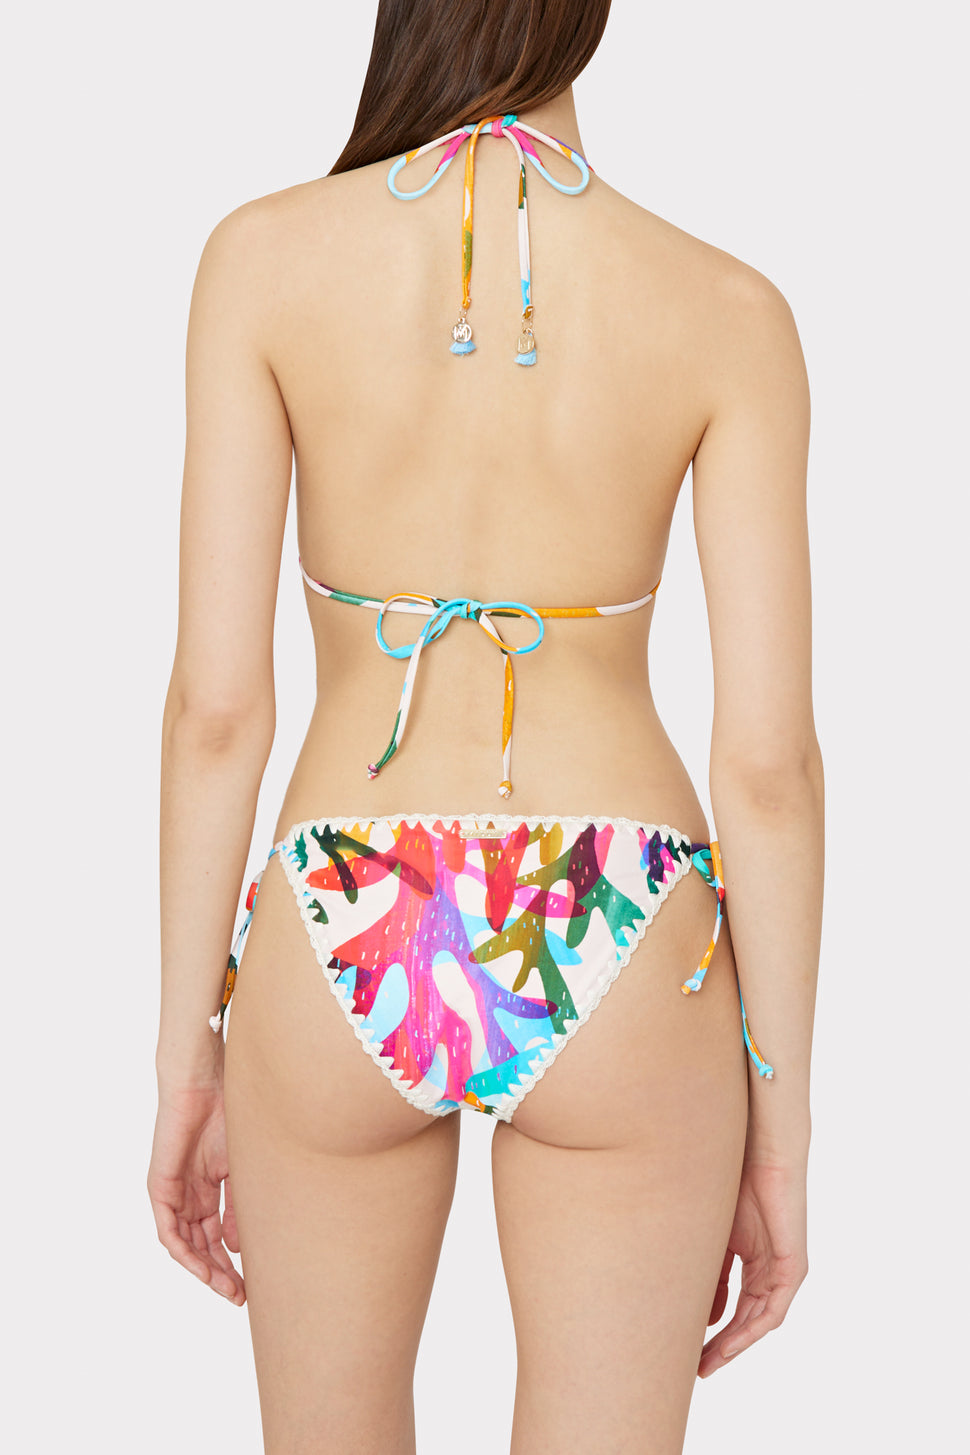  Women Bikini Top Bottom 2 Pieces Set Rainbow Colorful Striped  Classic Bathing Suit Swimsuit Swimwear : Clothing, Shoes & Jewelry